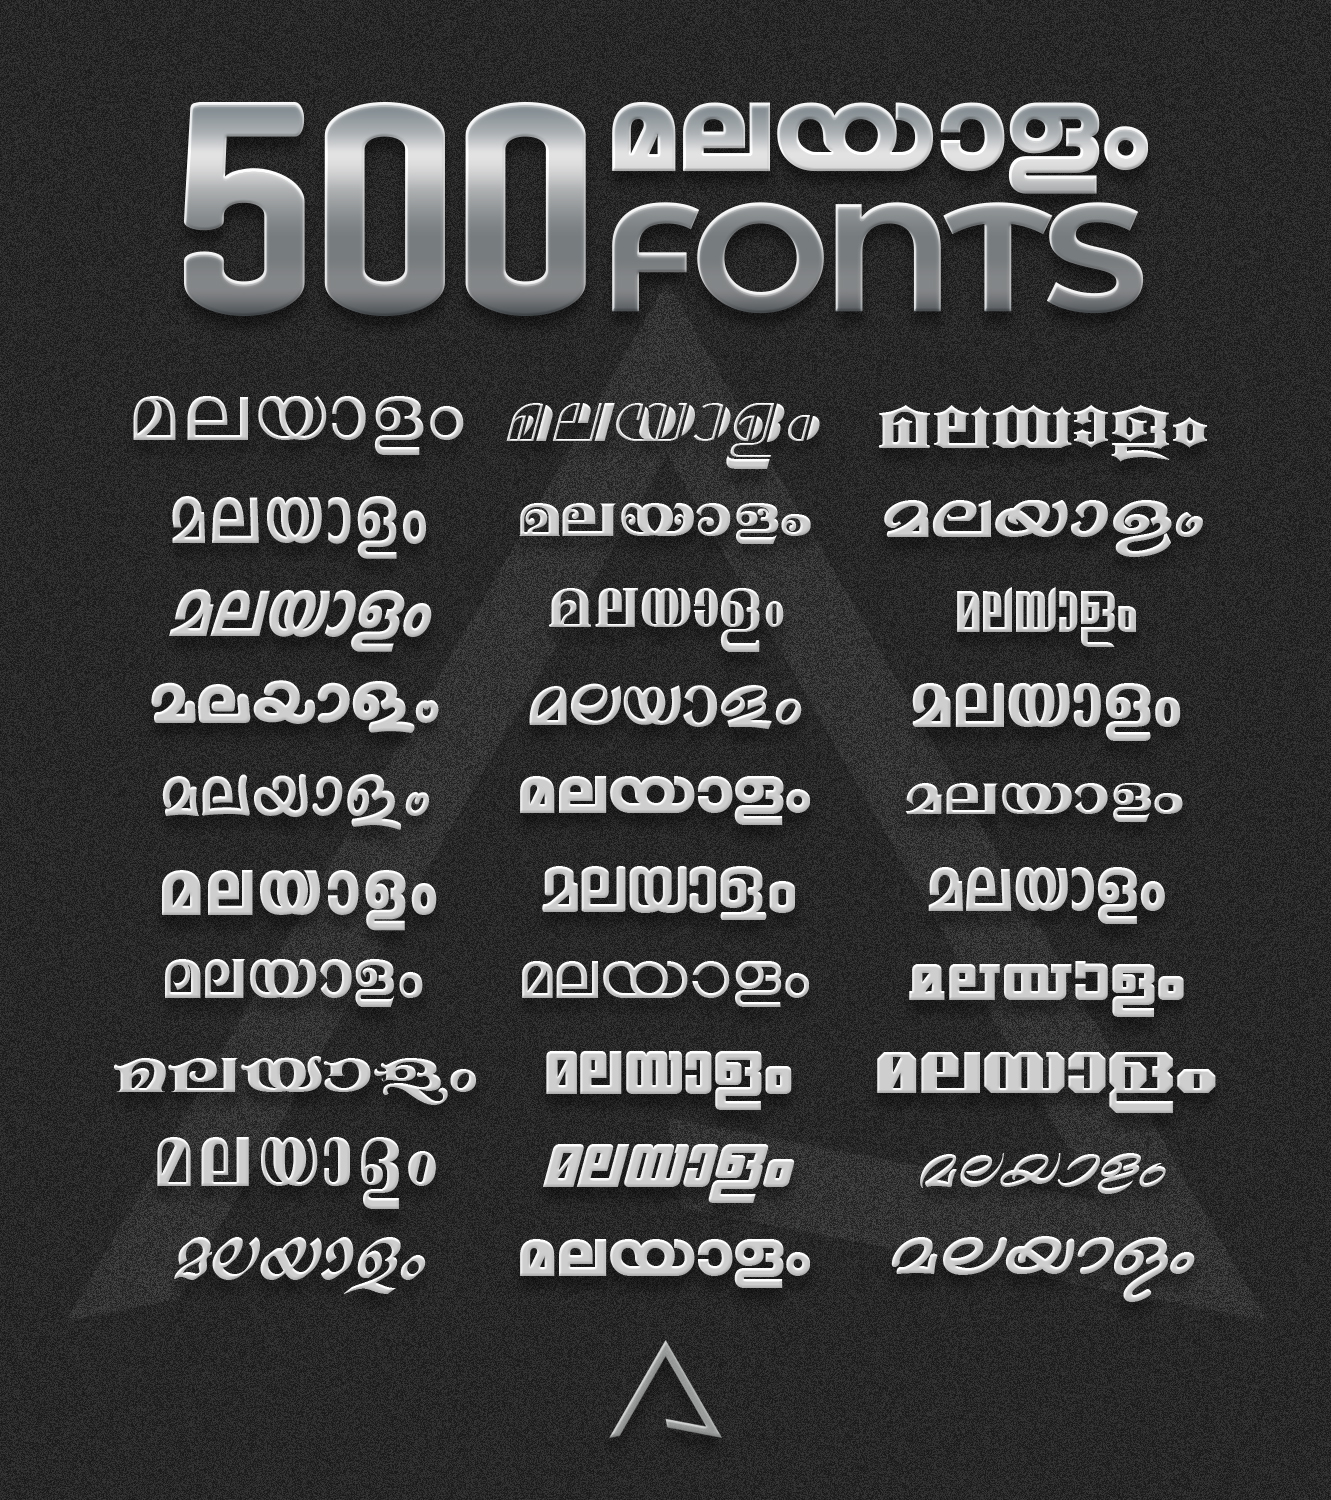 Download 500 Malayalam Fonts By Anulubi On Deviantart